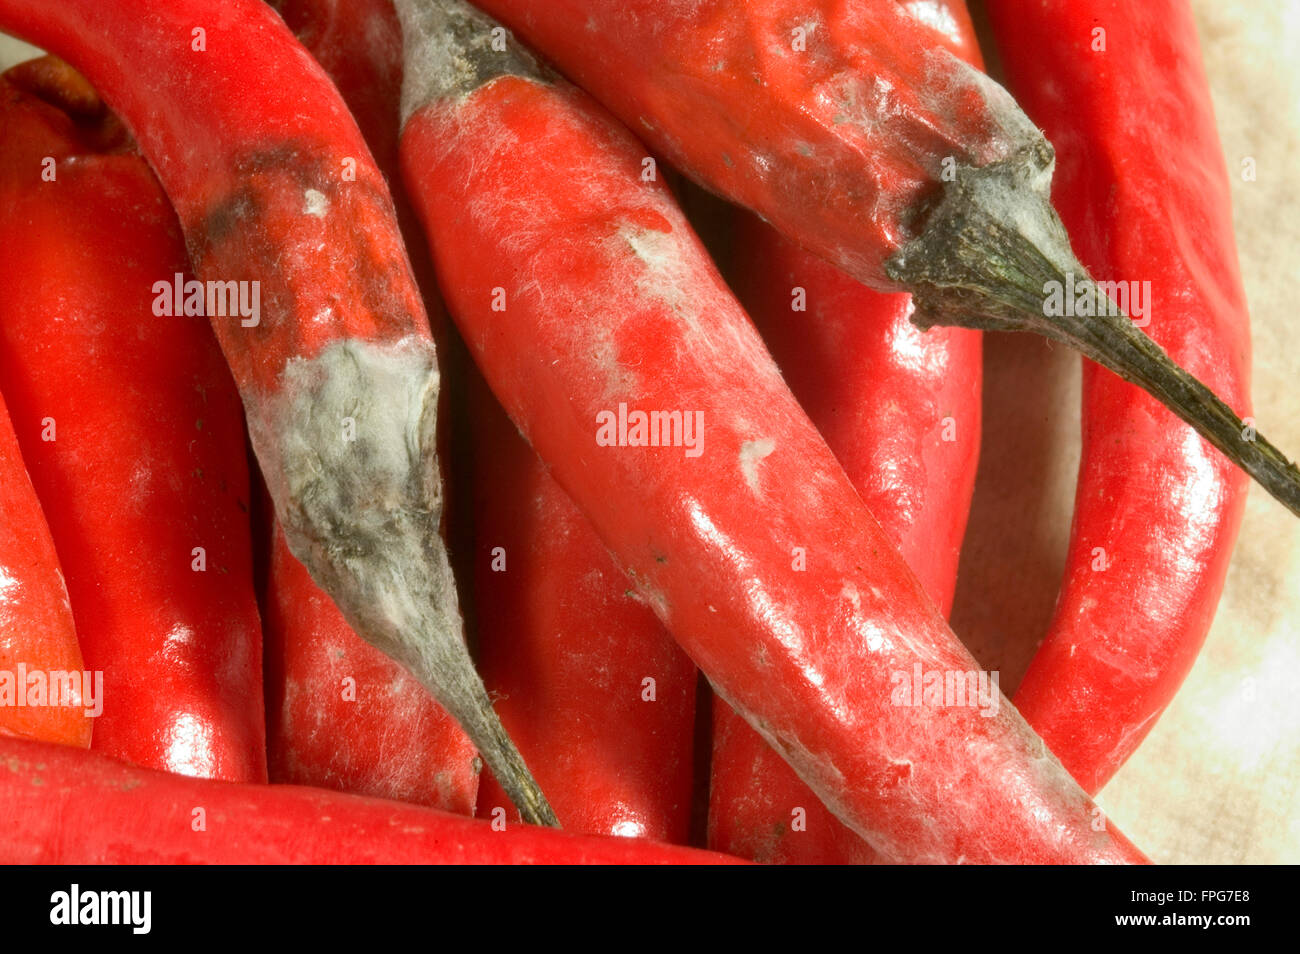 Grey mould (Botrytis cinerea) developed on harvested chilli peppers Stock Photo